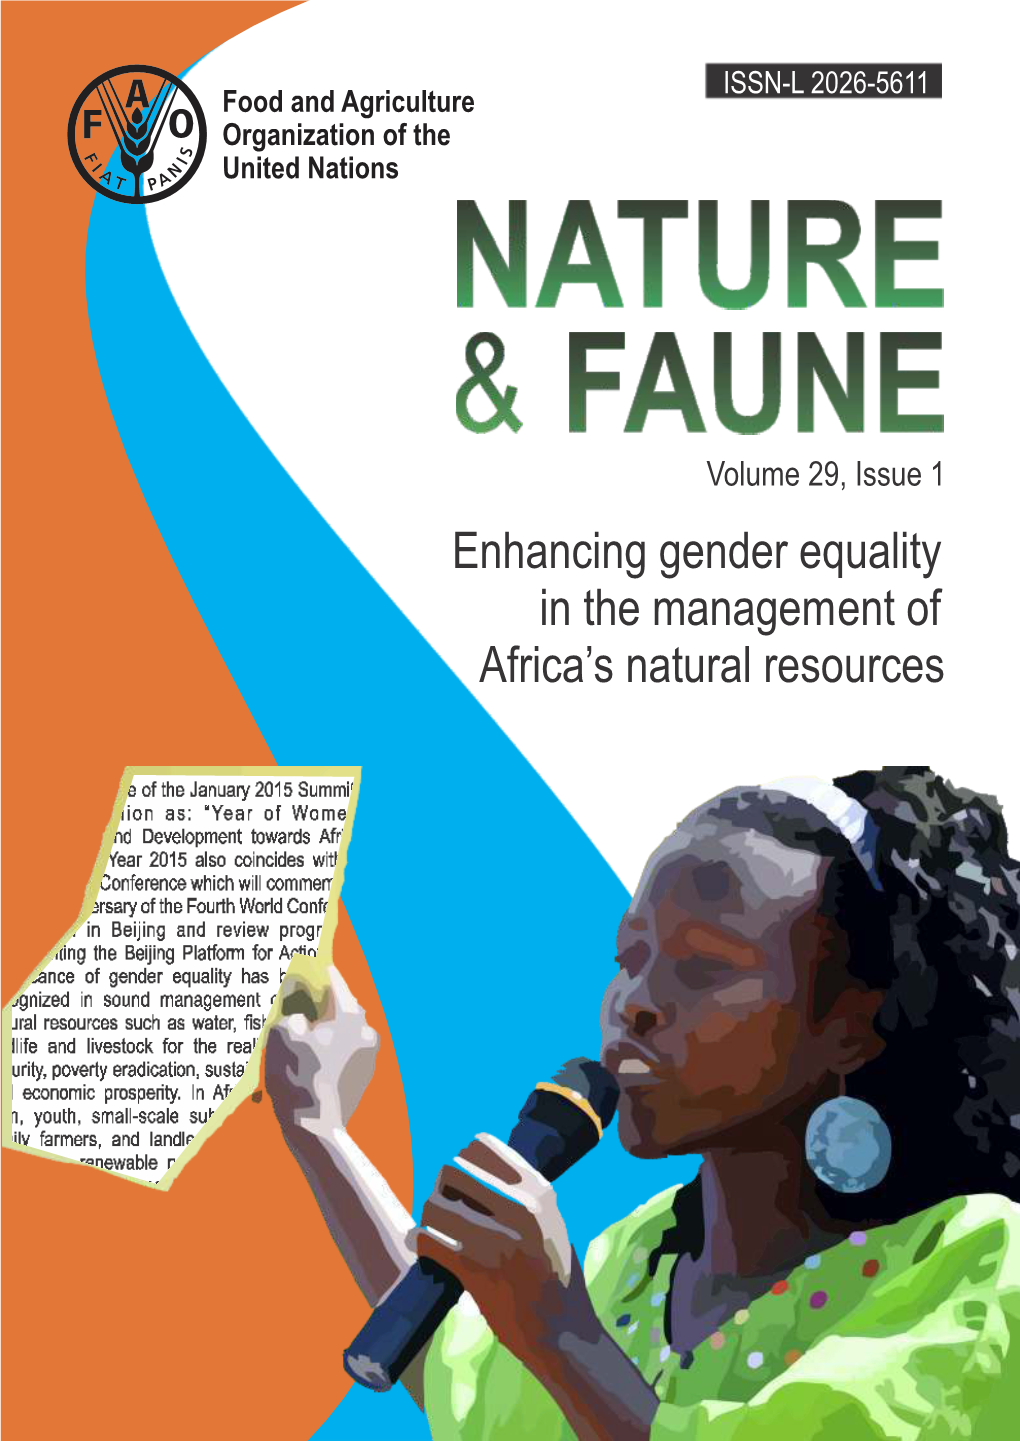 Nature & Faune, Volume 29, Issue 1